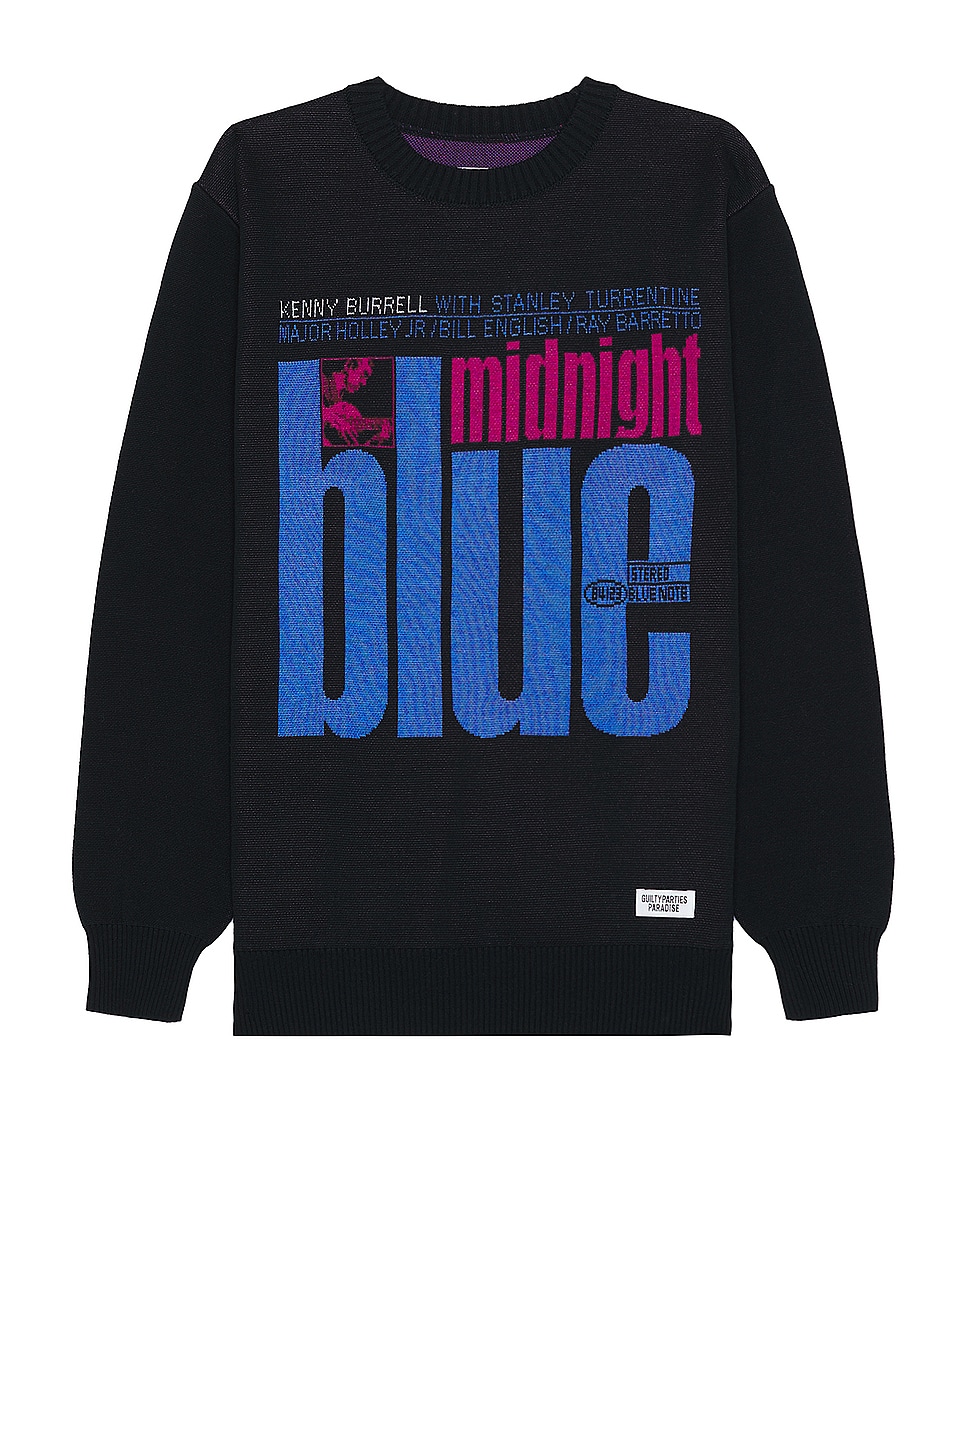 Blue Note Jacquard Sweater in Black